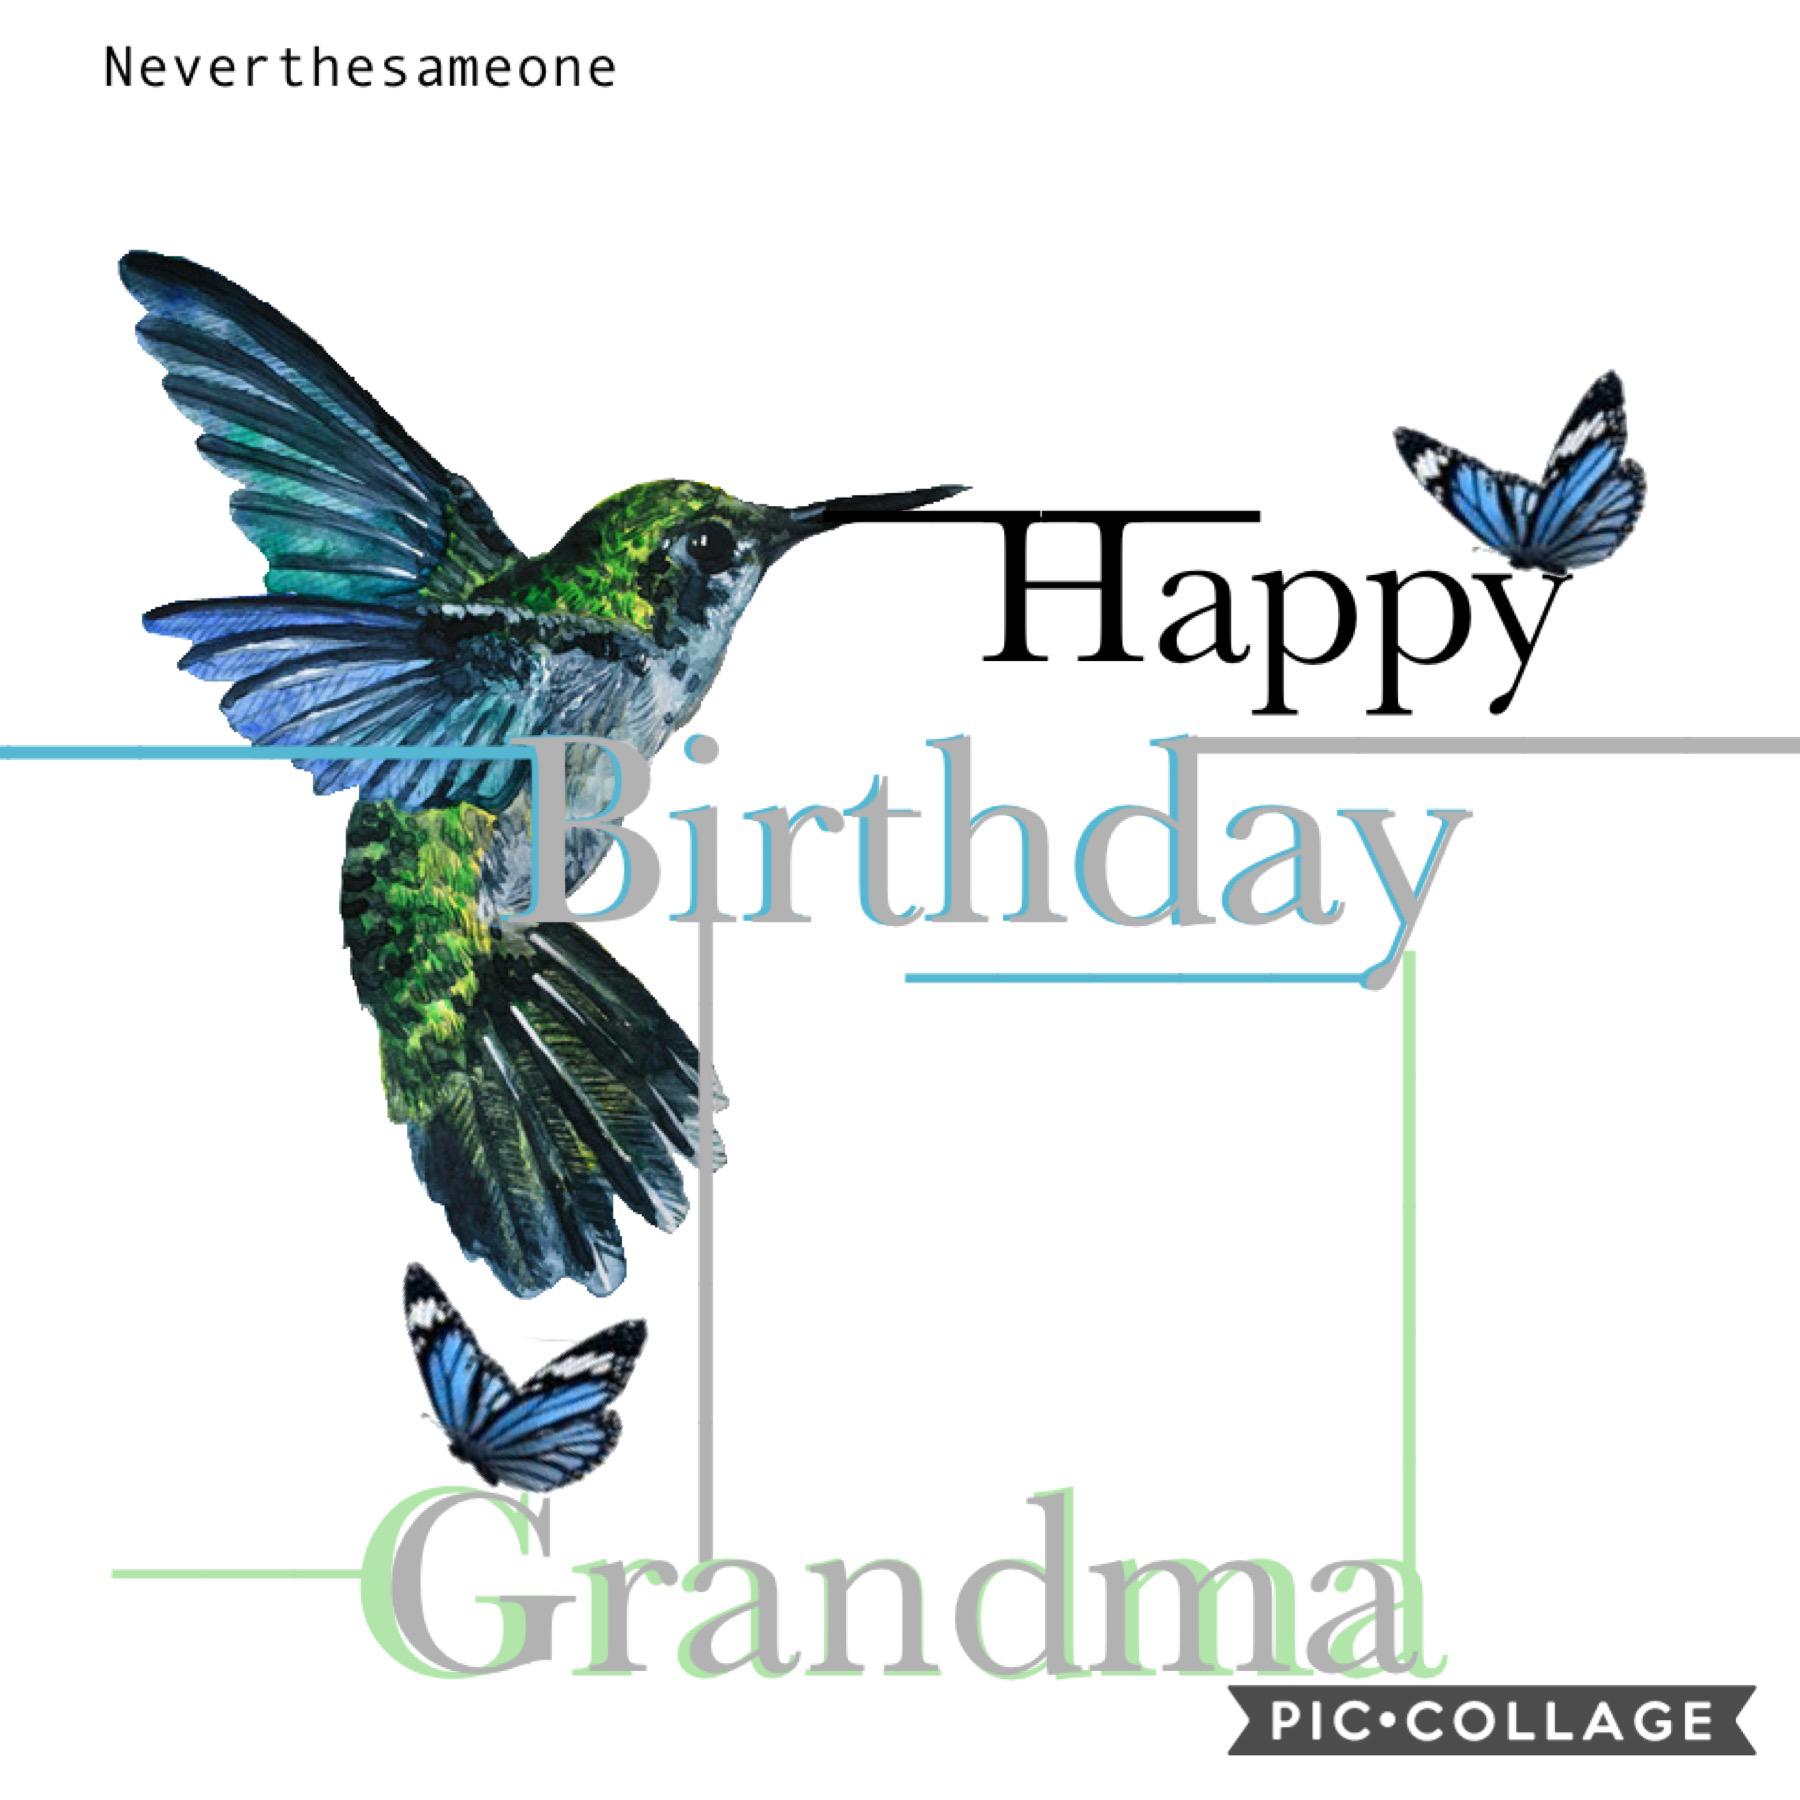 Happy Birthday Grandma! 